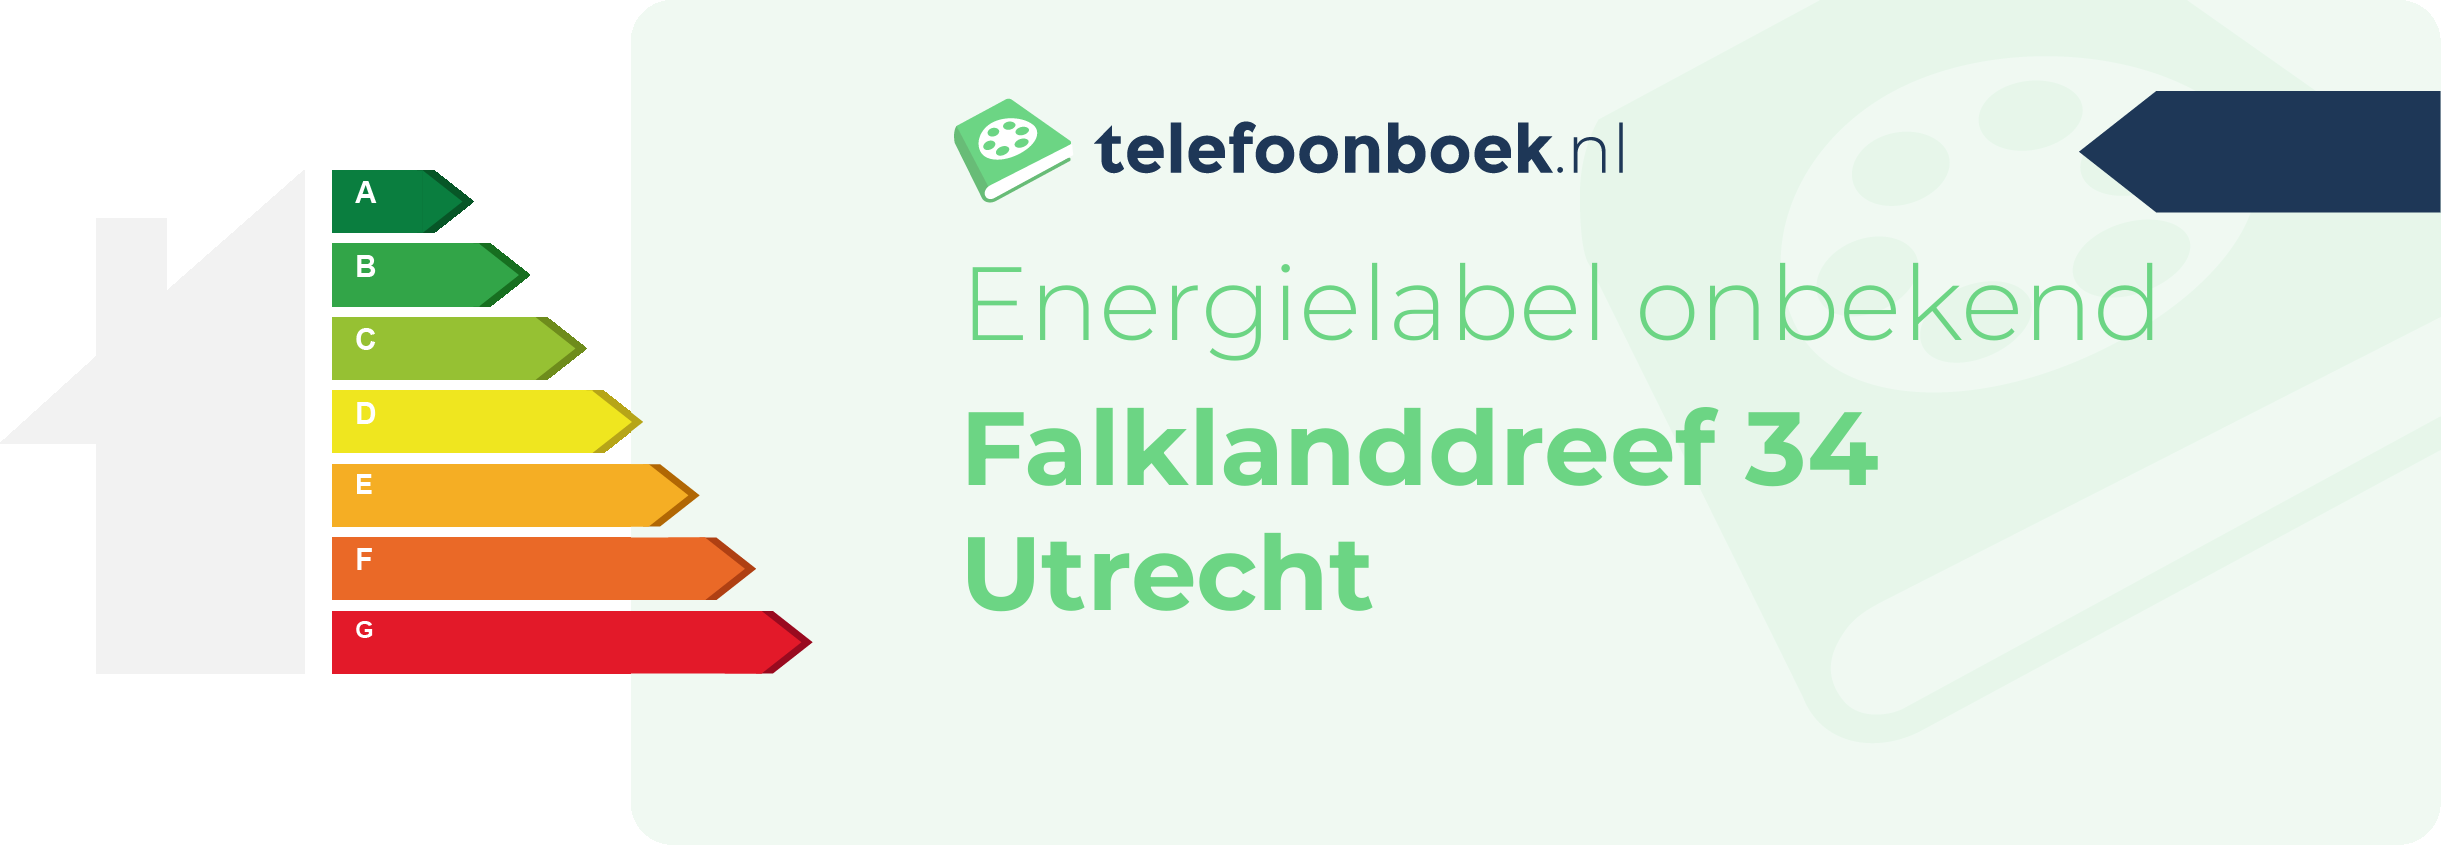 Energielabel Falklanddreef 34 Utrecht